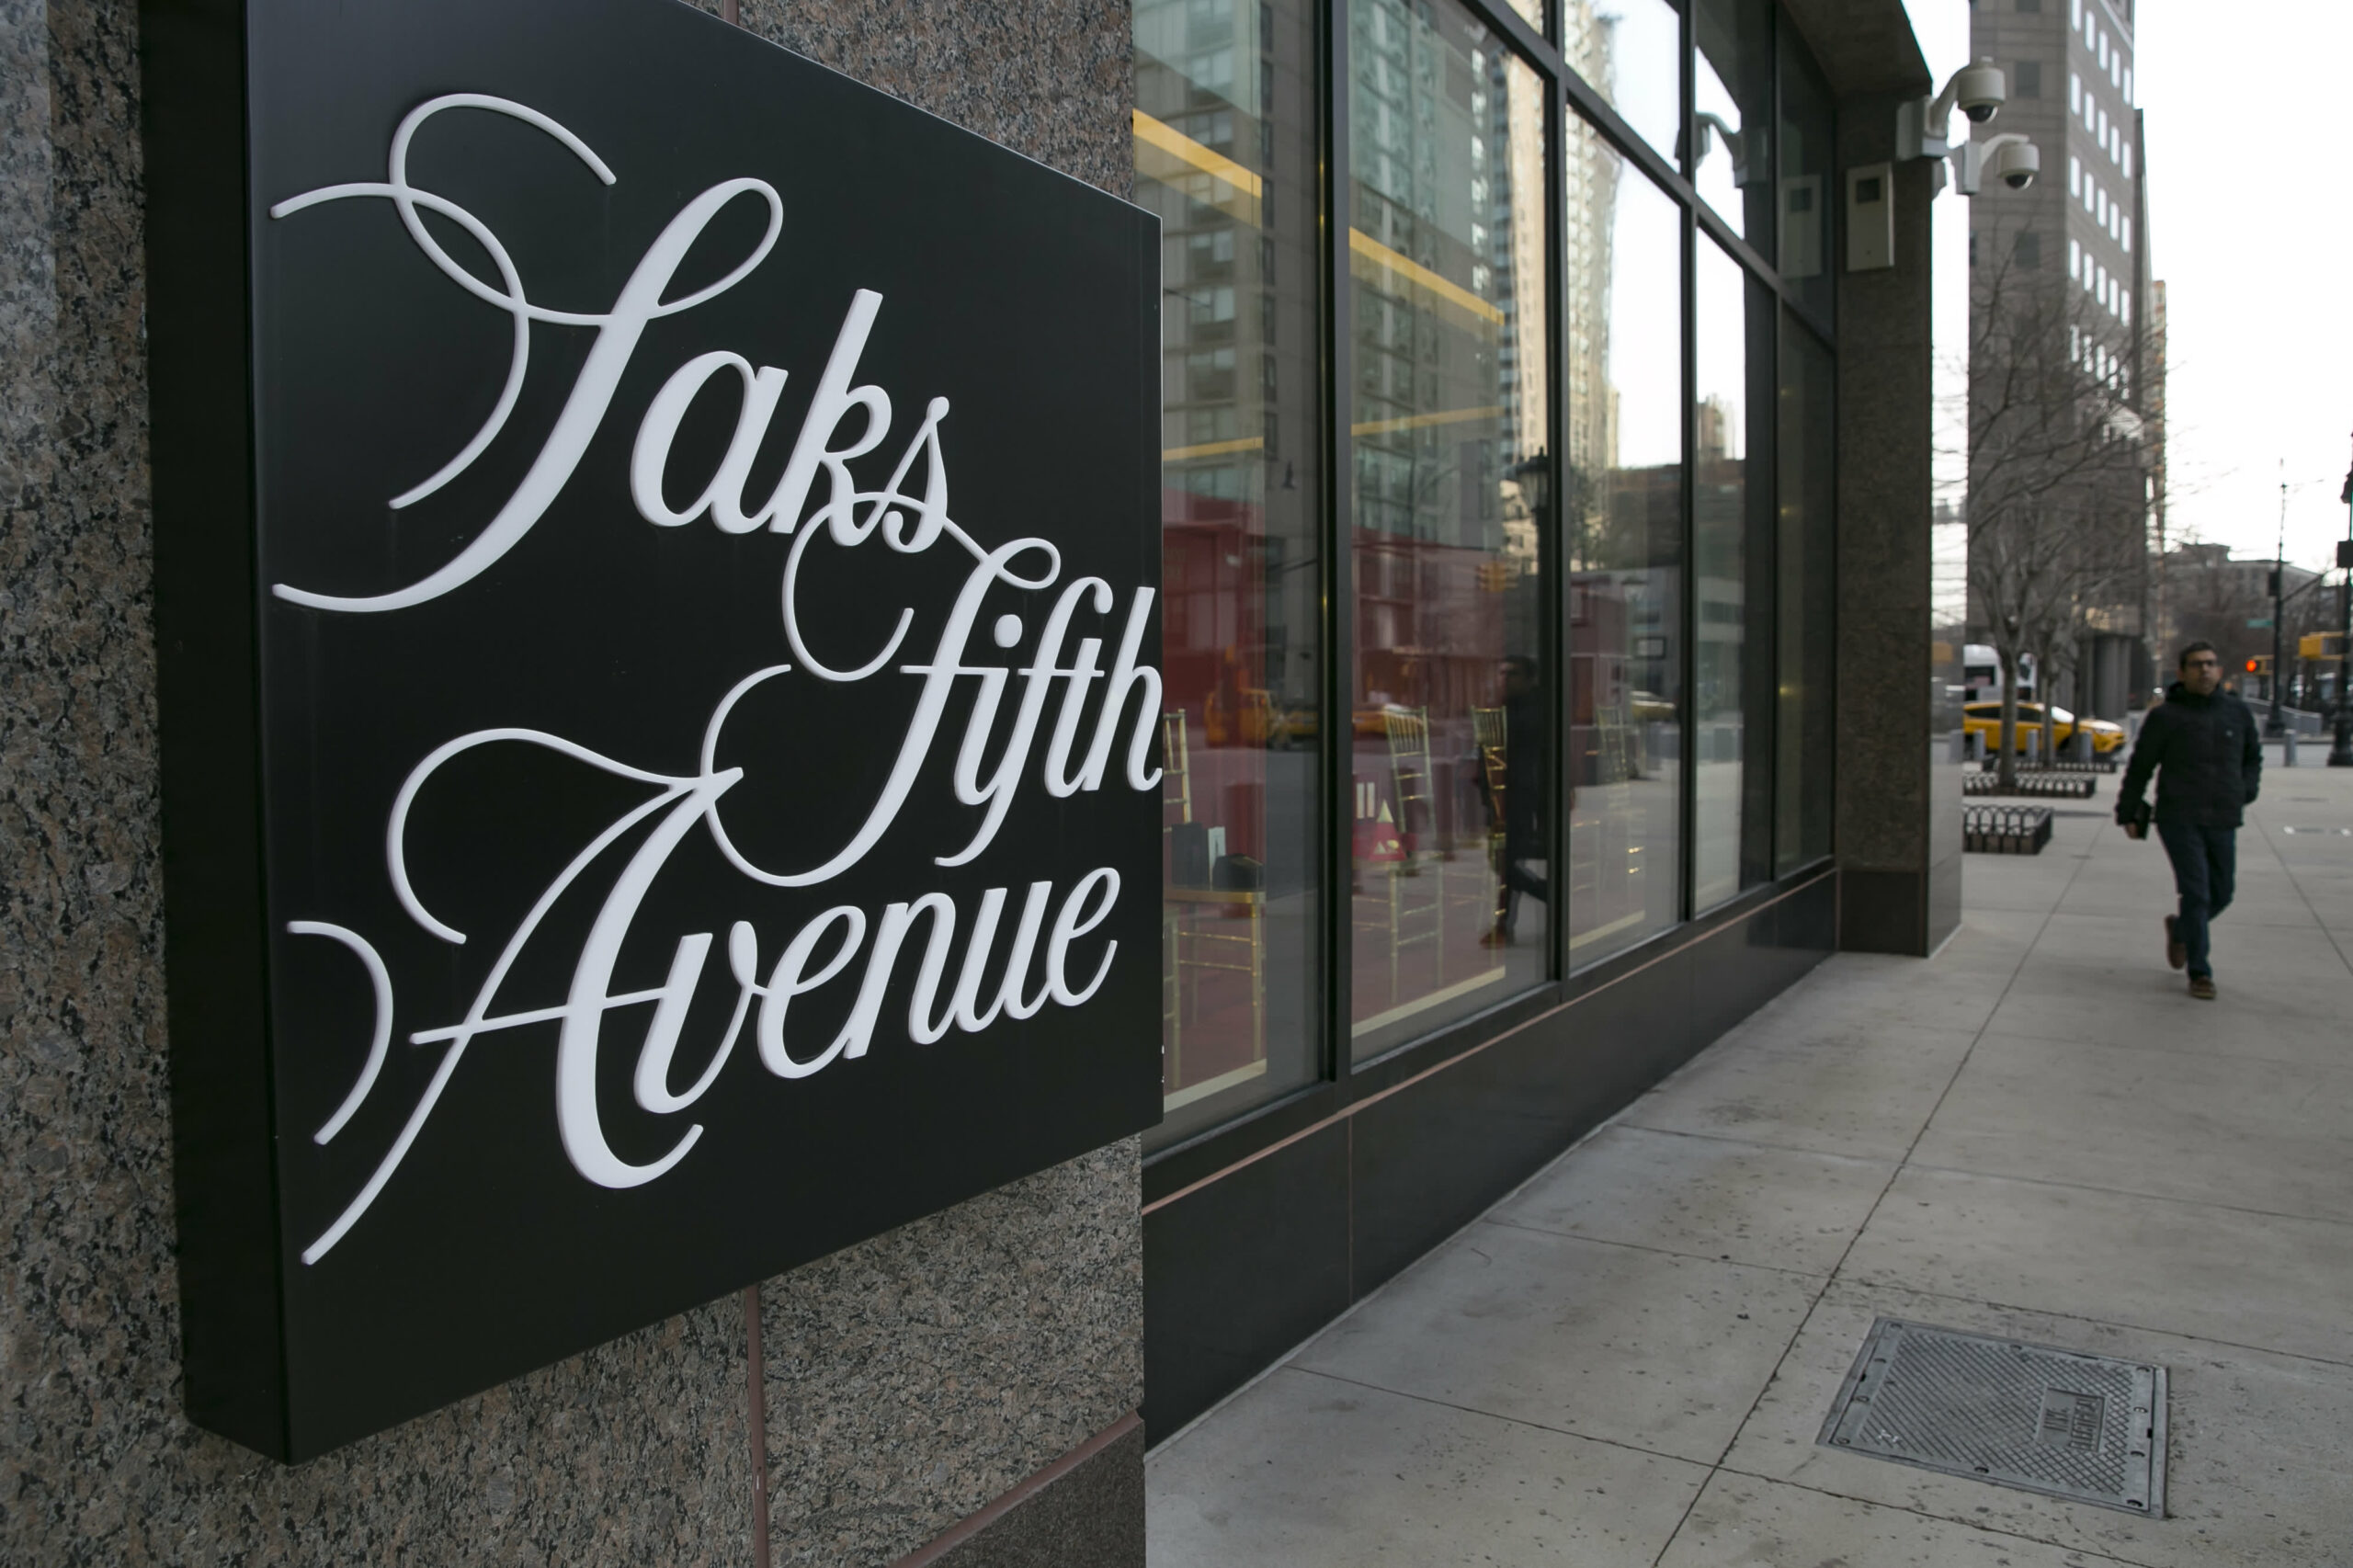 Saks CEO Marc Metrick says e-commerce split makes sense for luxury retailer